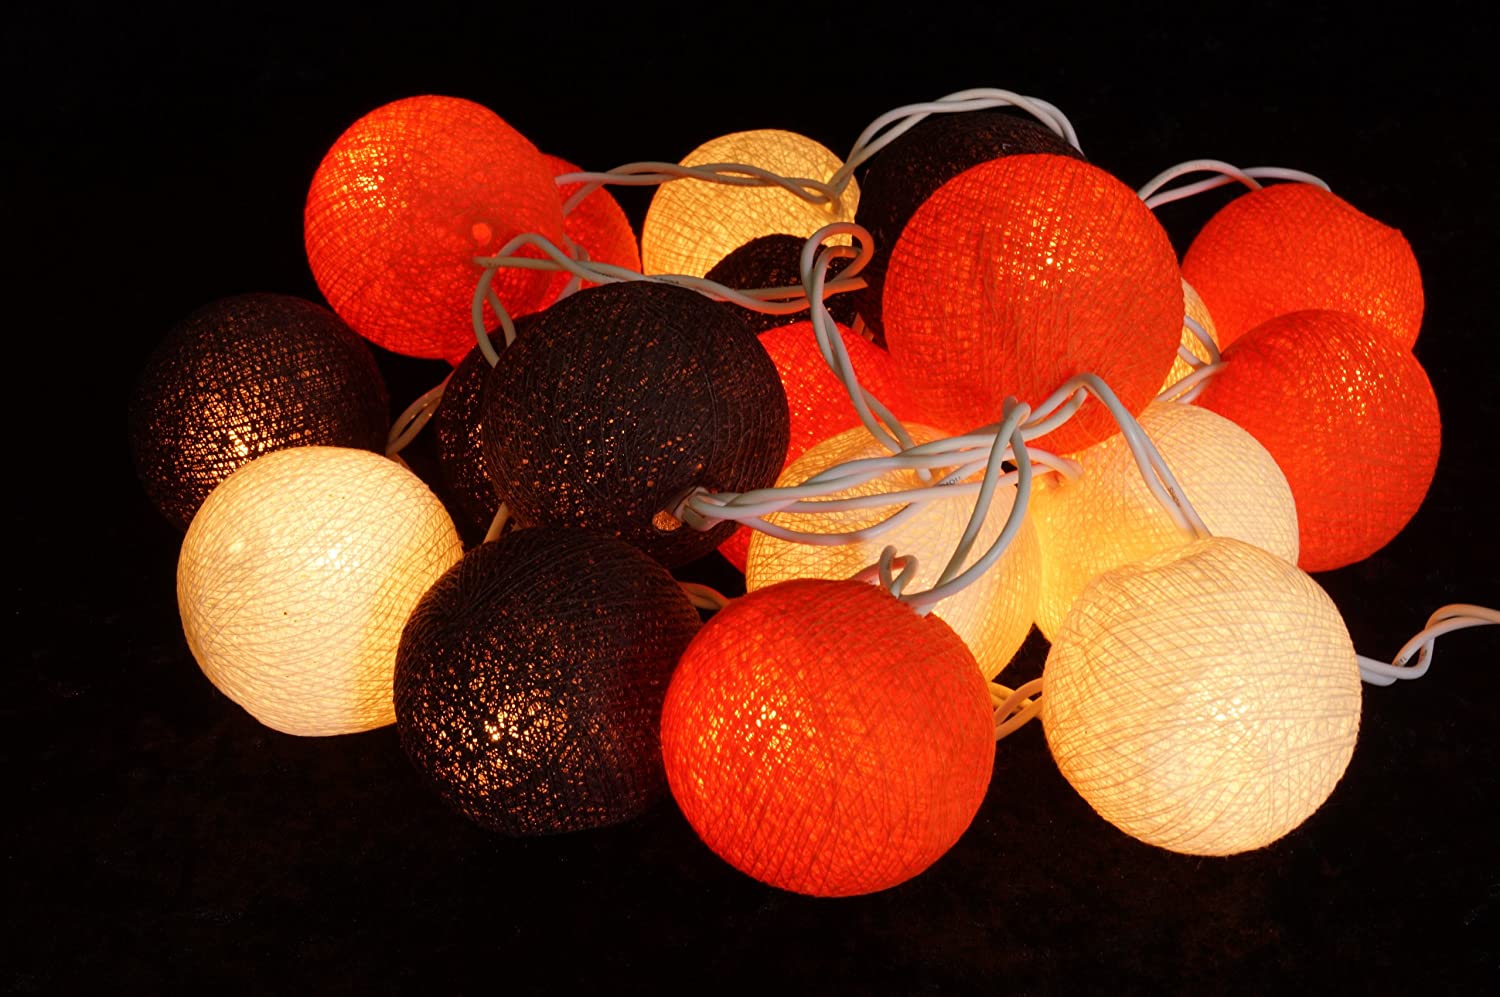 Guru-Shop Fabric Ball Battery String 3 X Aa Led Ball Fairy Lights, Turquois